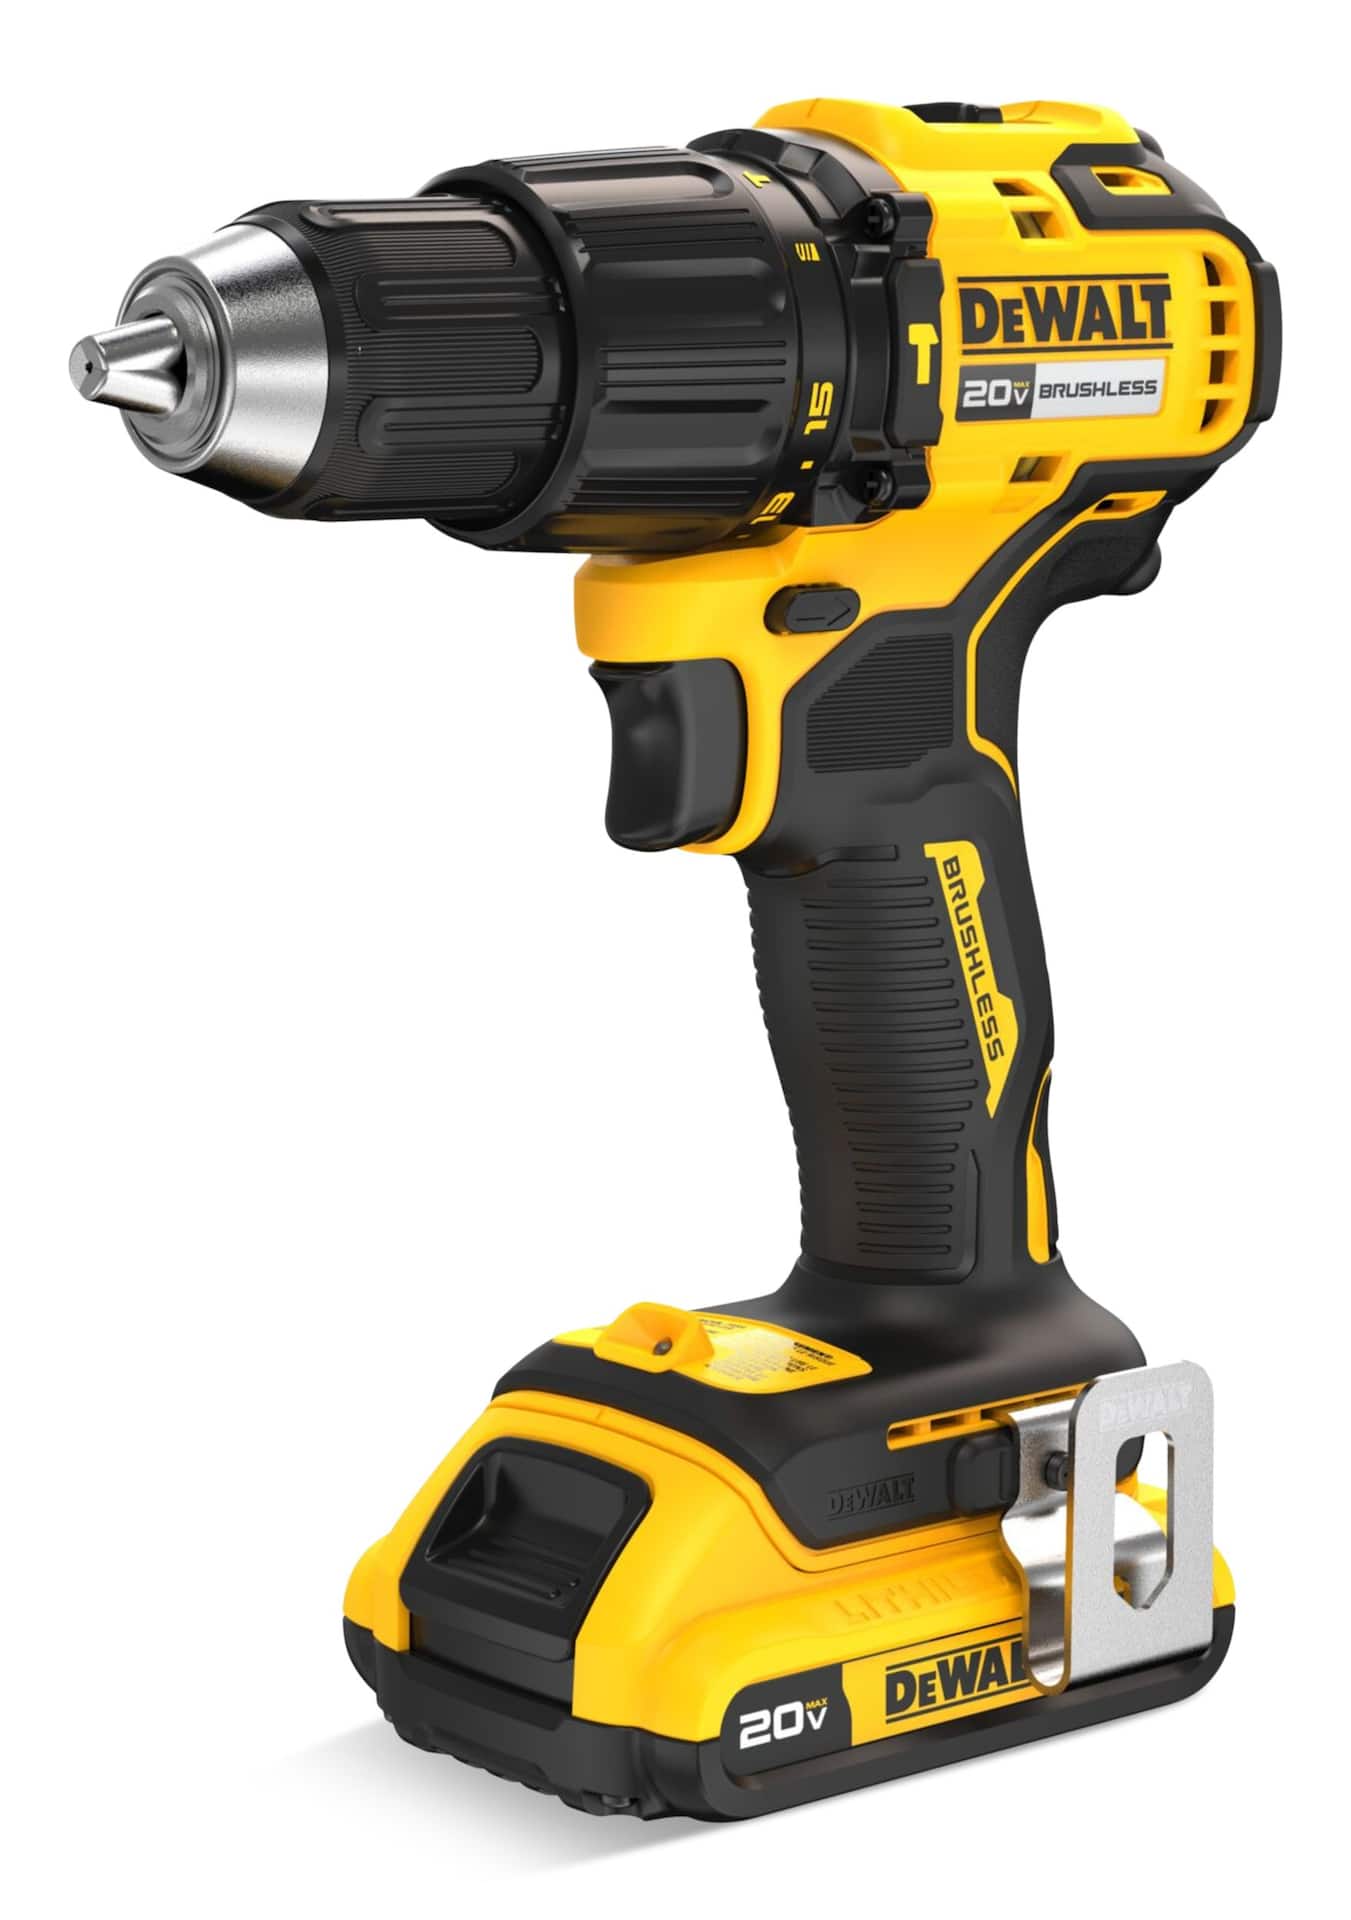 Dewalt 18V Compact Cordless Hammer Drill+100 piece Accessory Kit